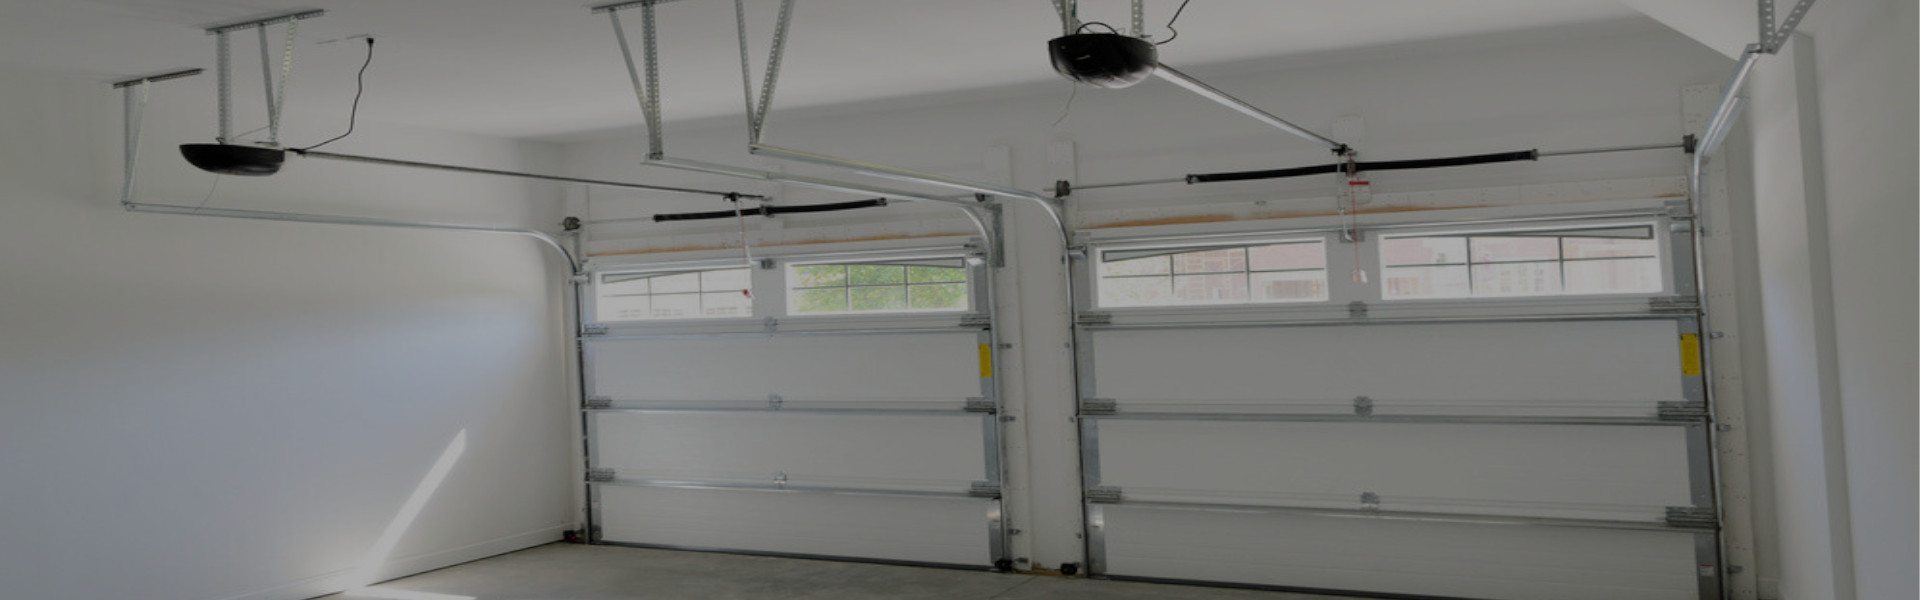 Slider Garage Door Repair, Glaziers in Greenford, UB6